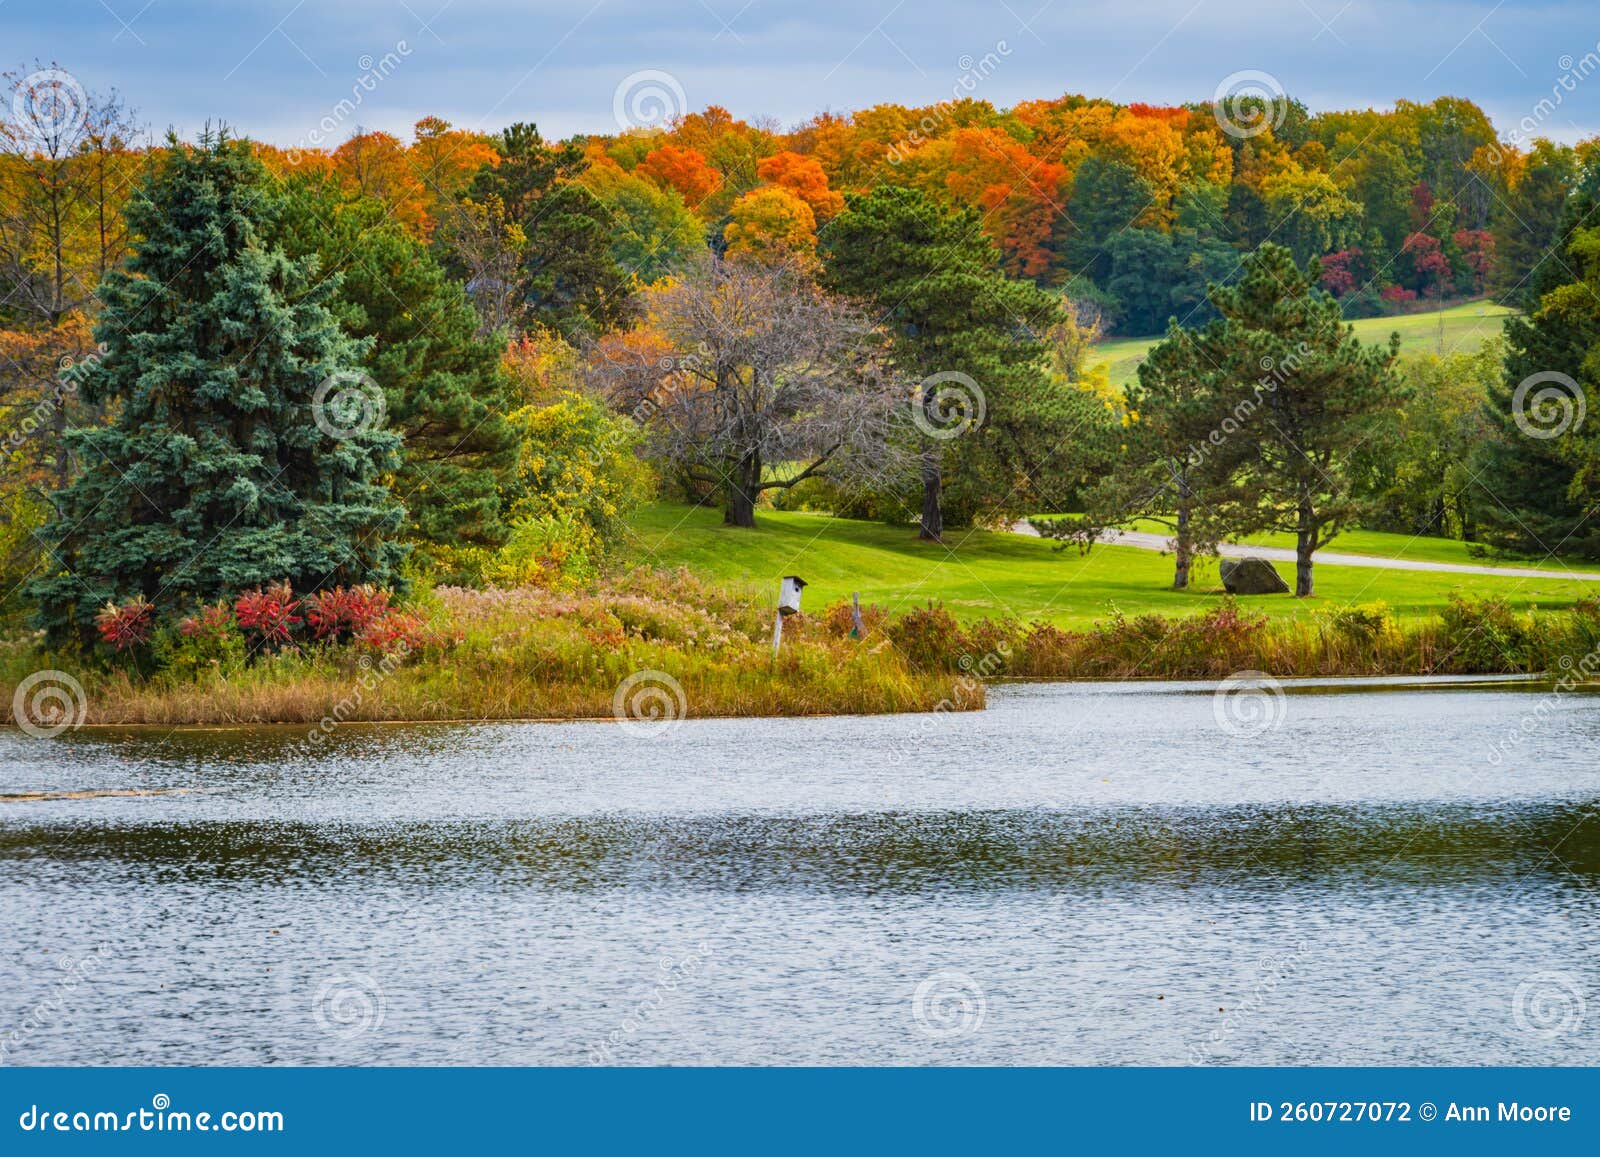 pond on farm in autumn